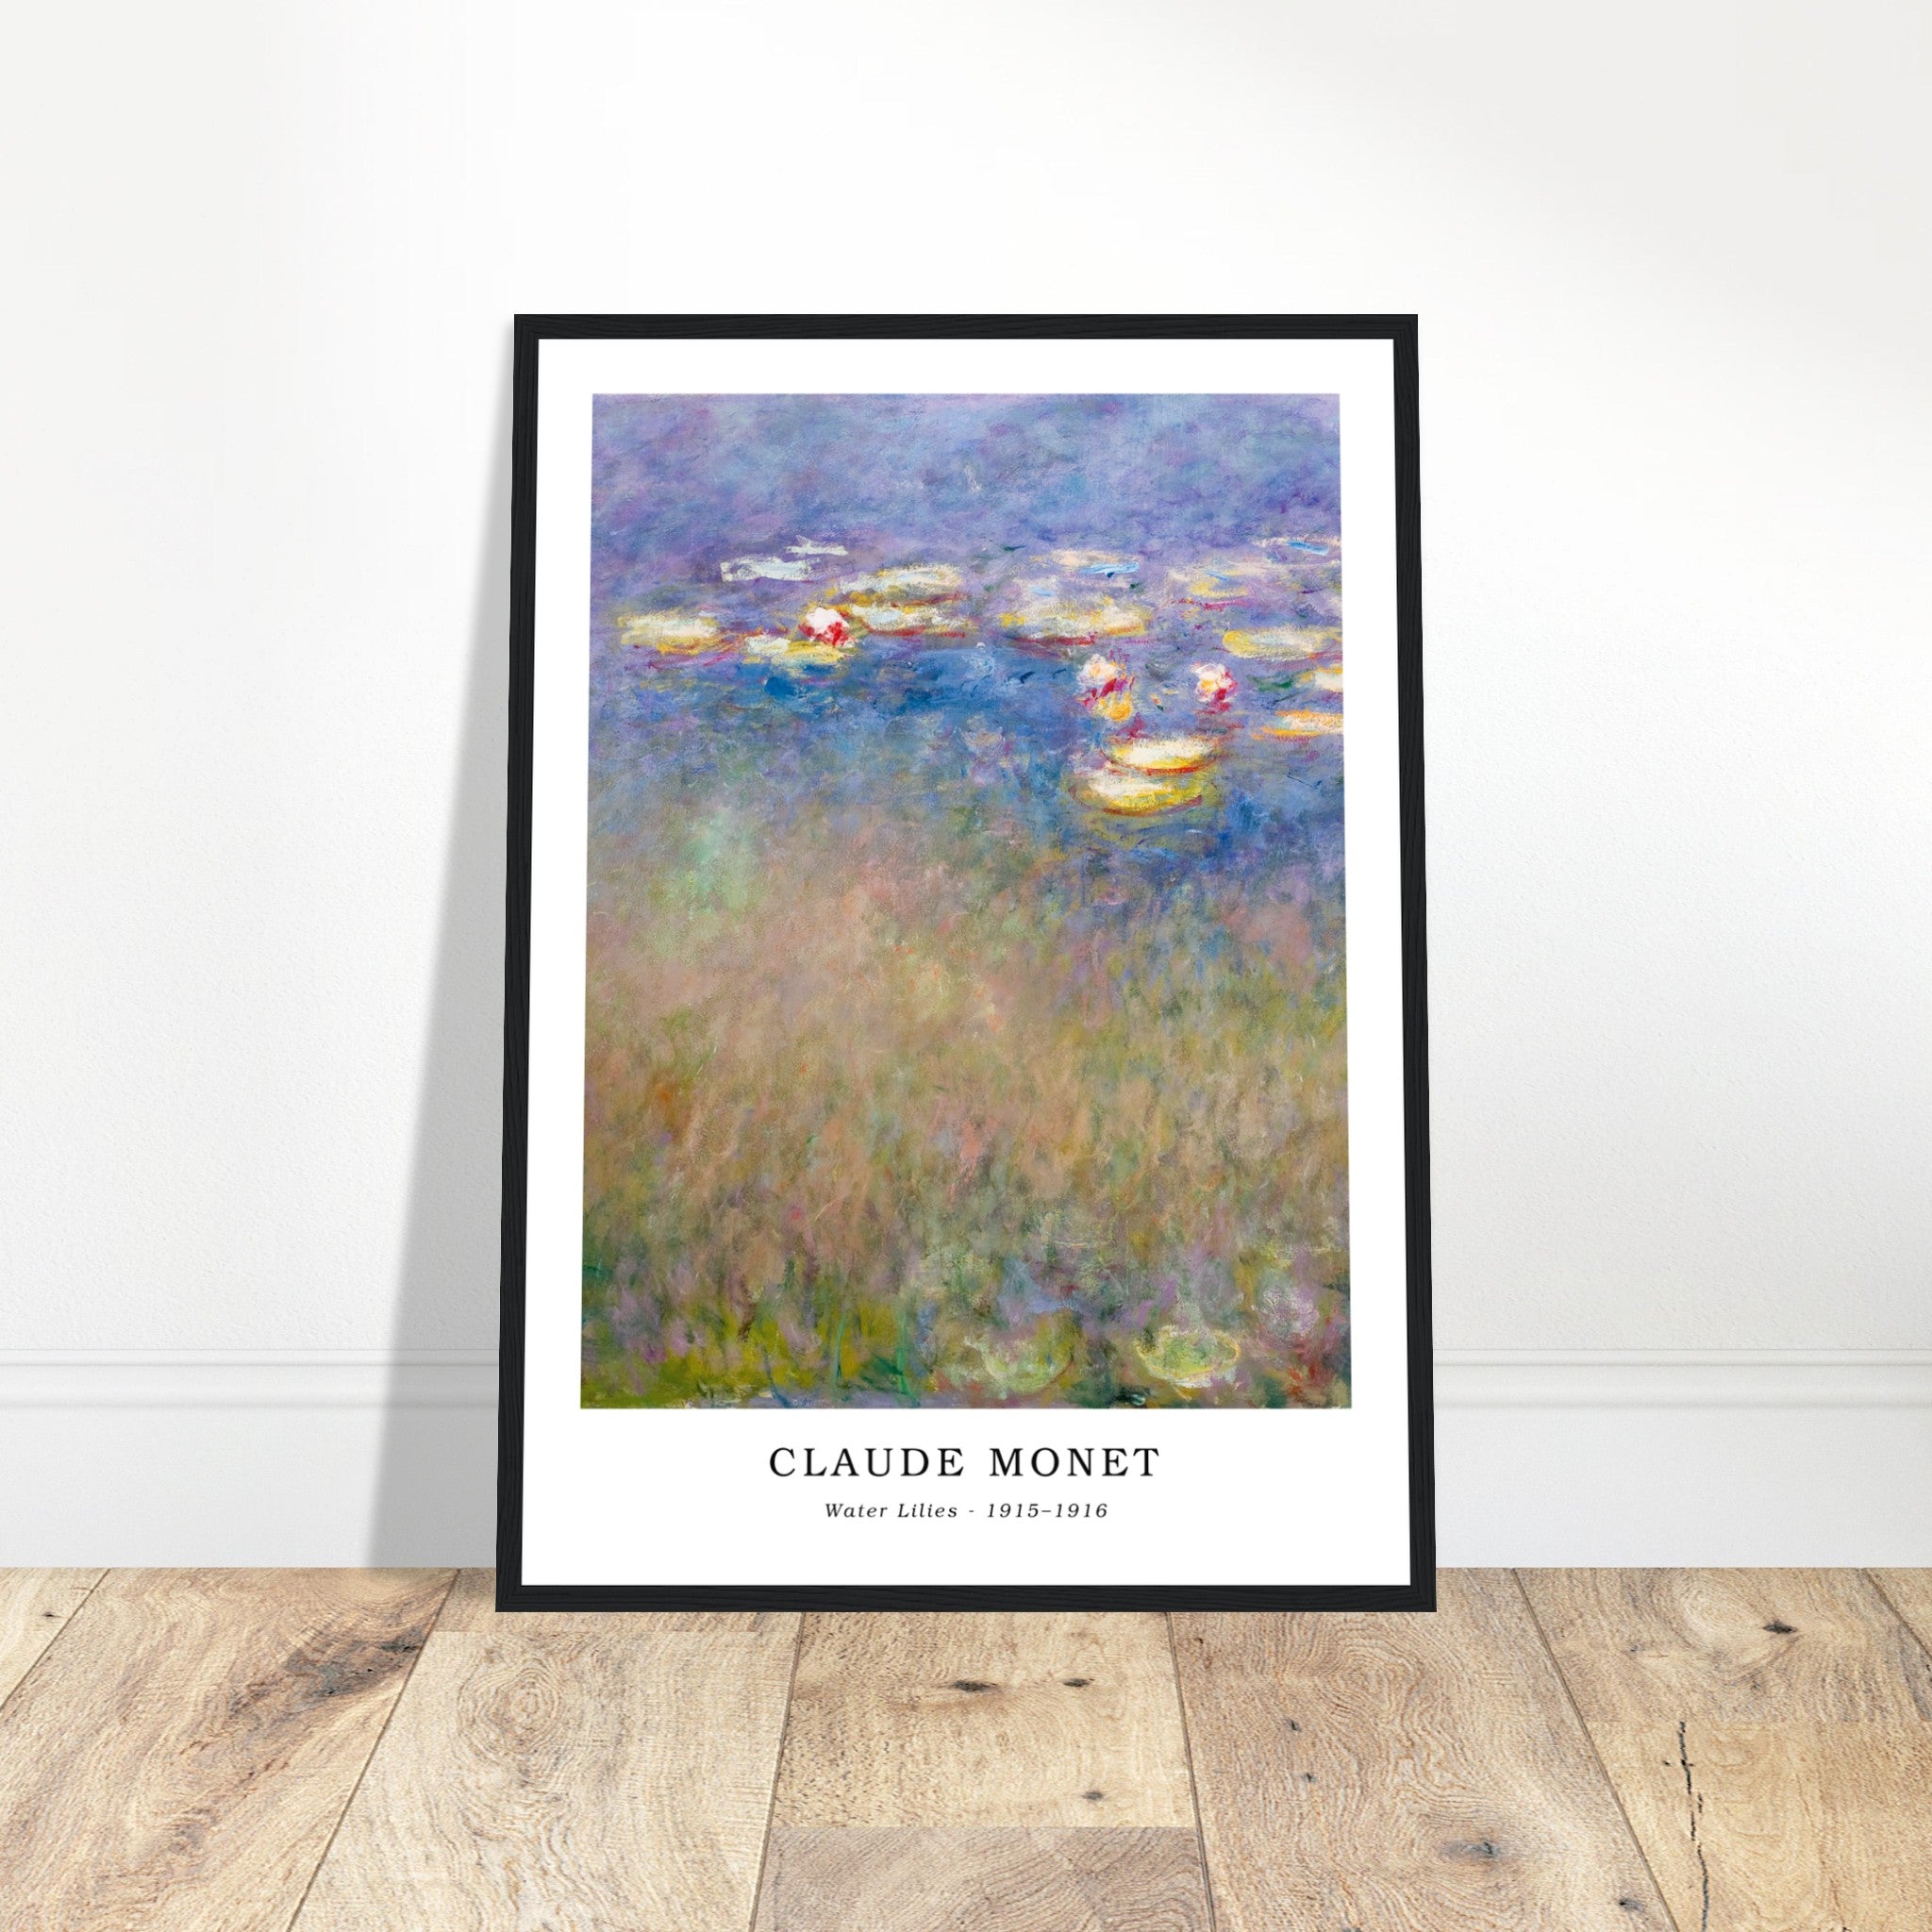 Claude Monet's Water Lilies Poster